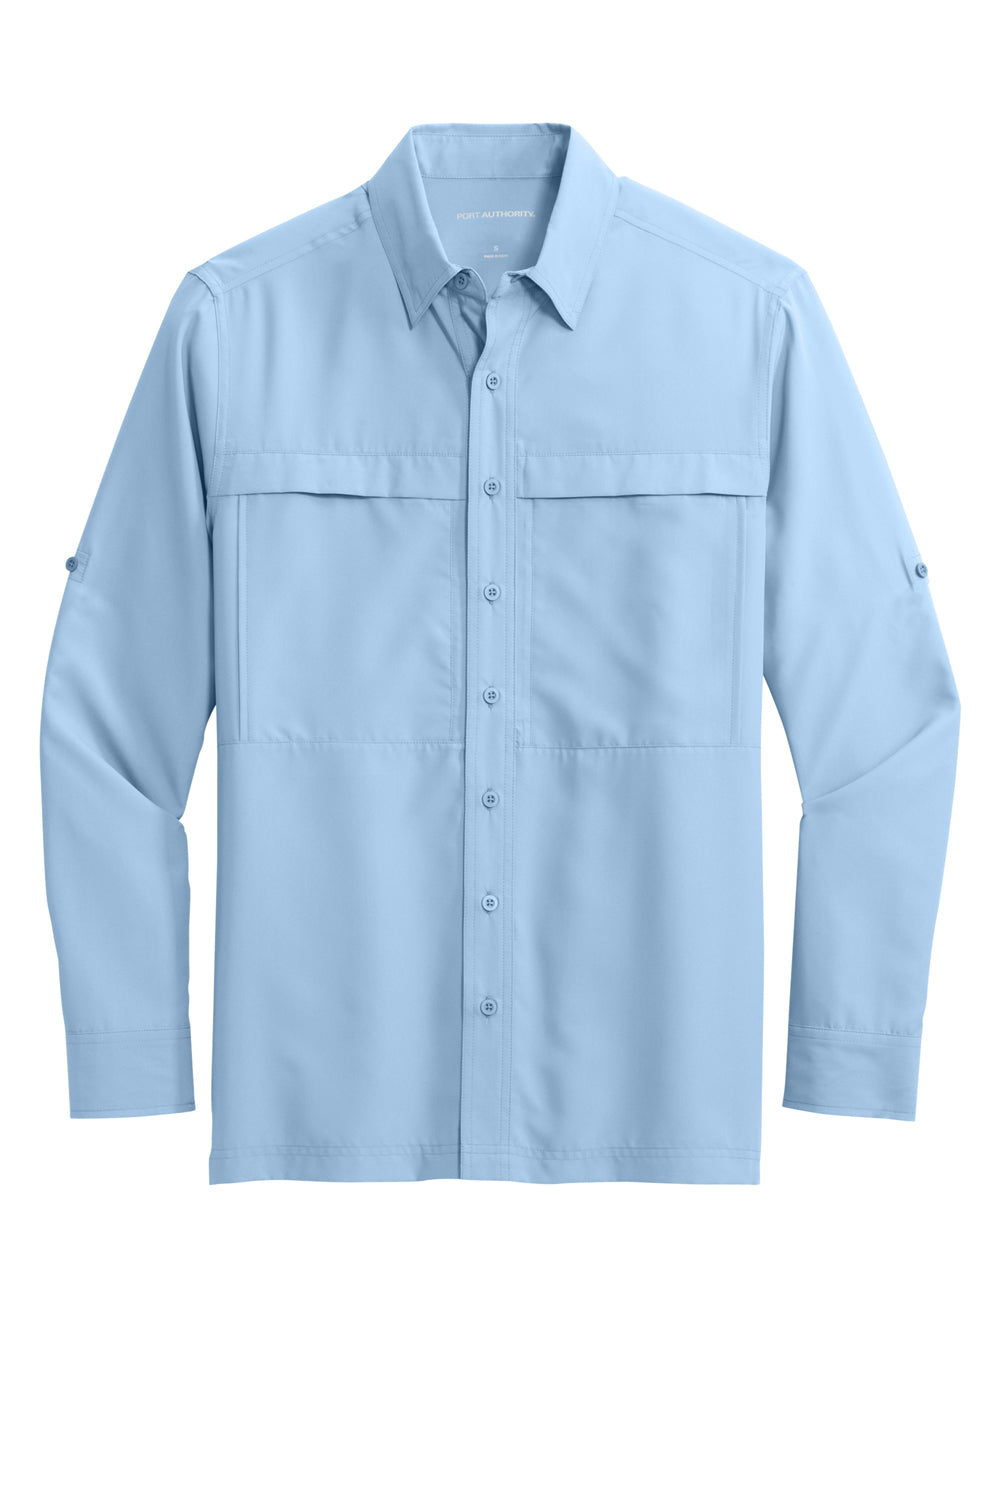 Port Authority W960 UV Daybreak Long Sleeve Button Down Shirt Light Blue Flat Front